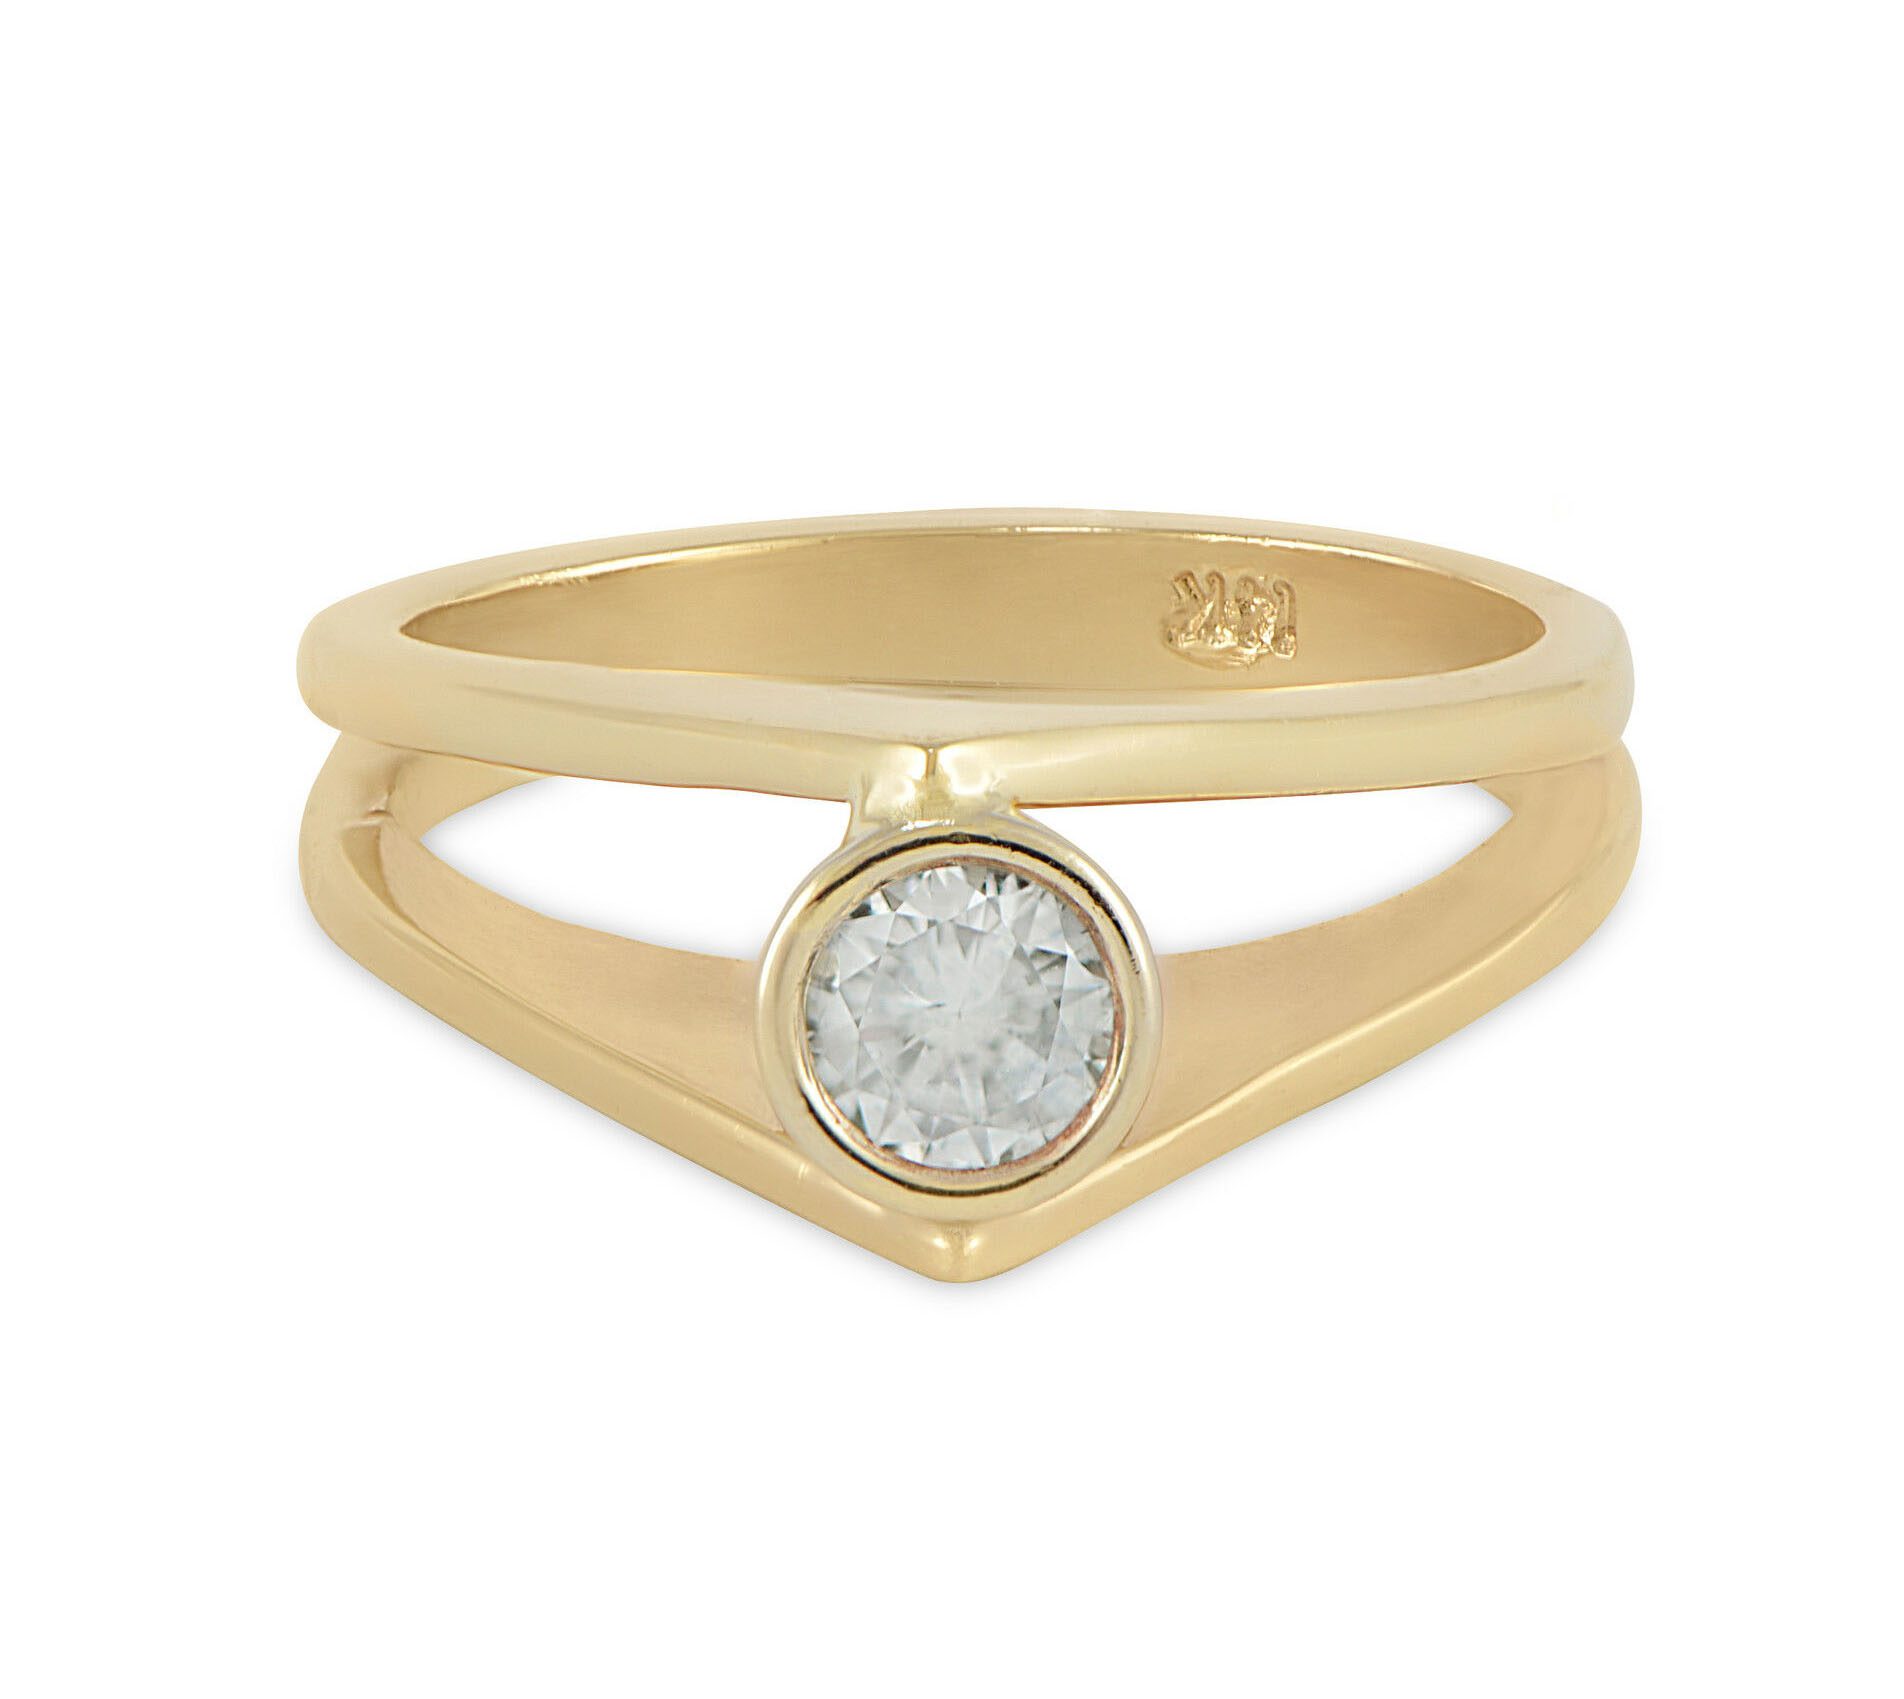 Round-Diamond-Engagement-Ring-14k-Yellow-Gold-Bezel-Setting-Double-Band-Size-55-112454232189